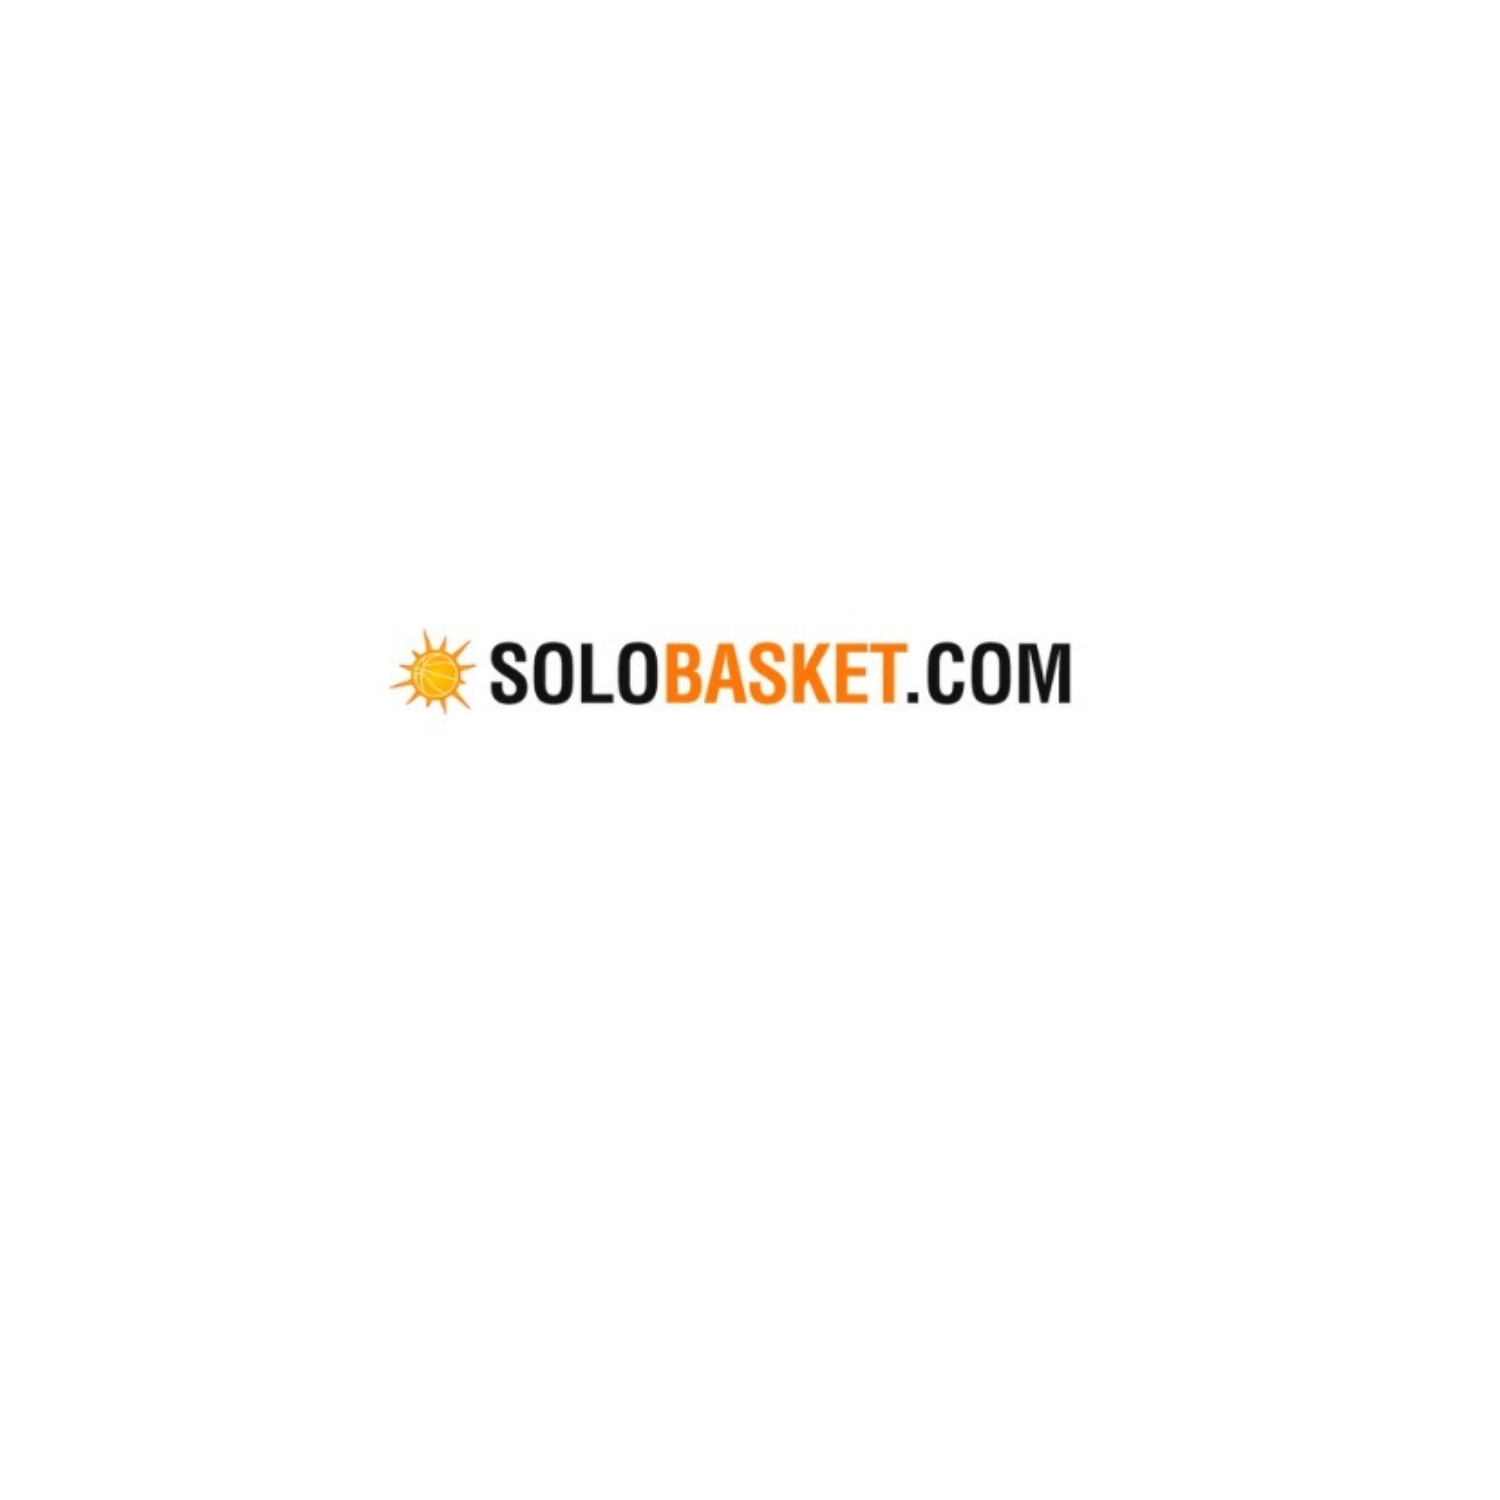 North Star acquires Solobasket.com